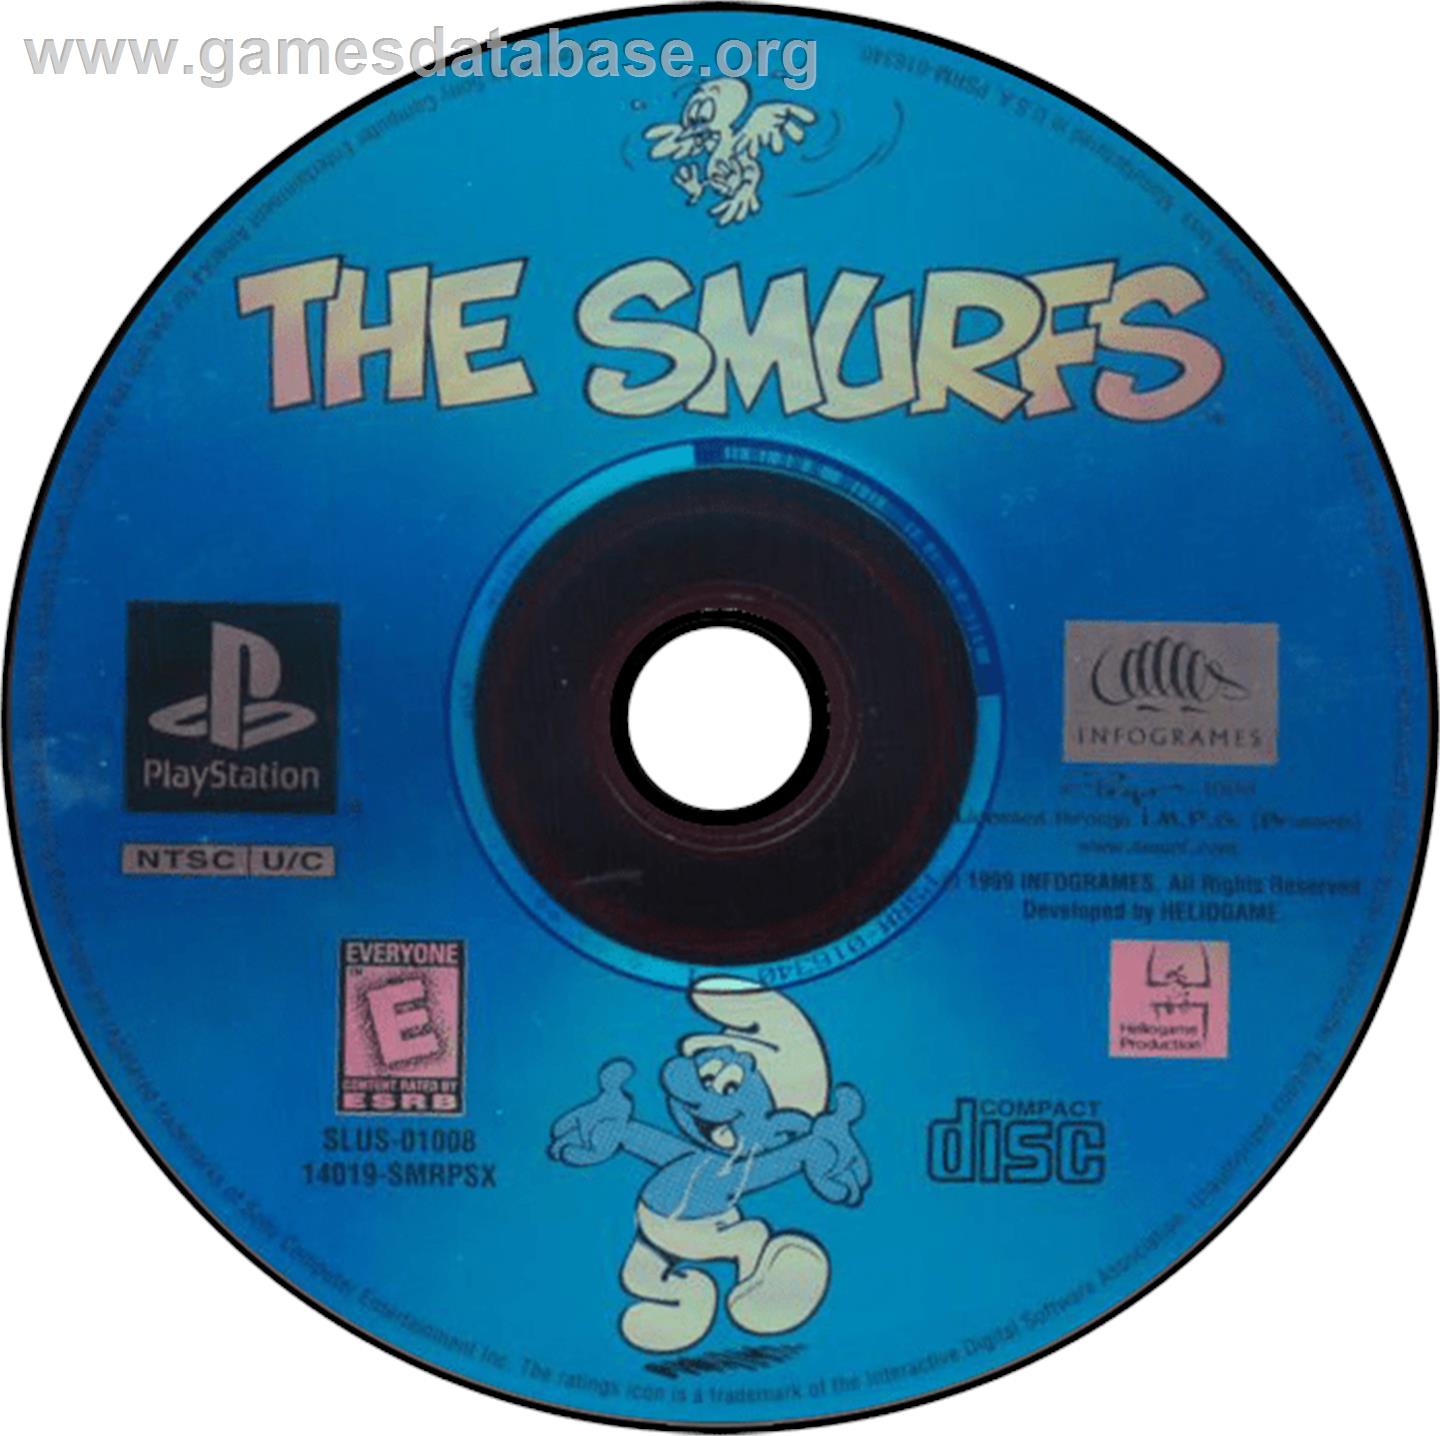 The Smurfs - Sony Playstation - Artwork - Disc